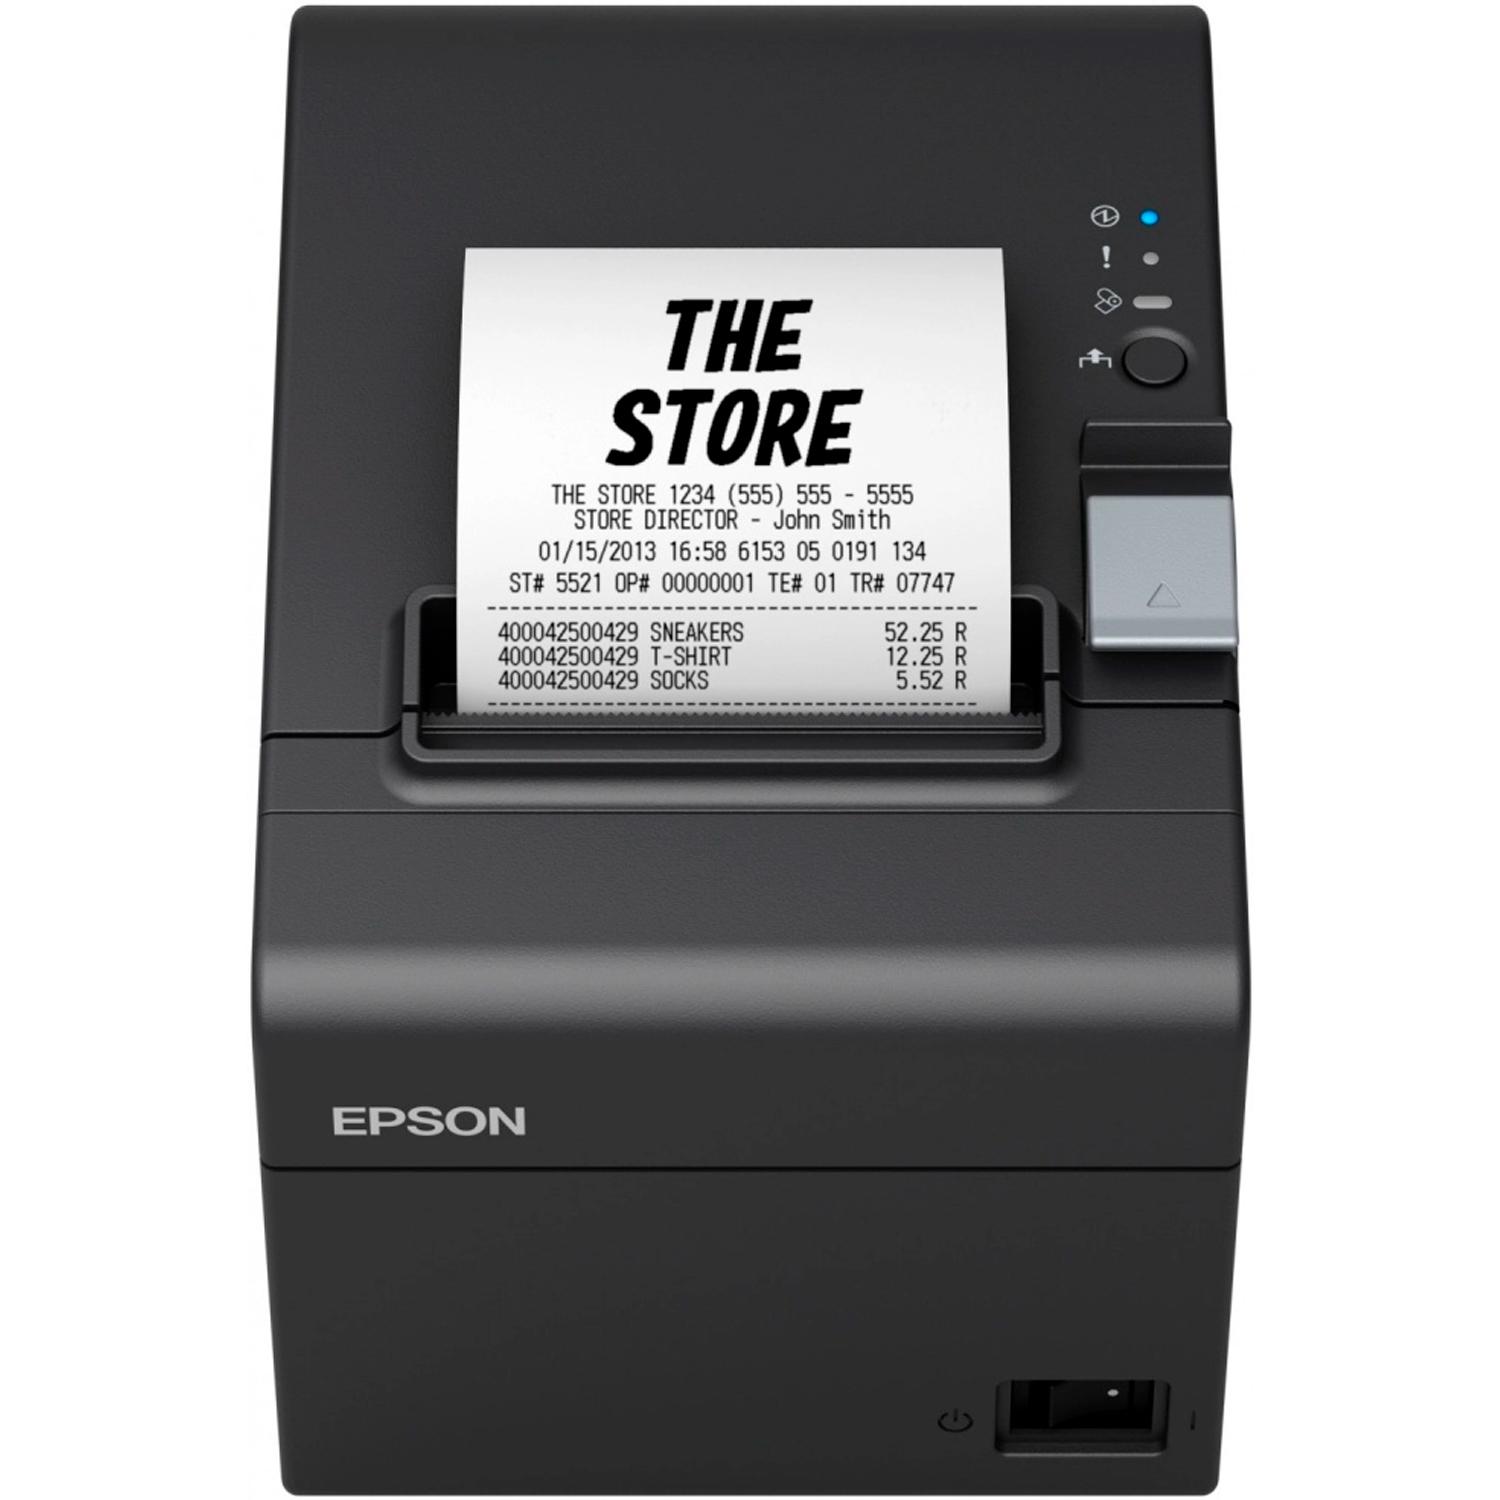 Impresora Termica EPSON TM-T20III-001 80mm USB Serial C31CH51001